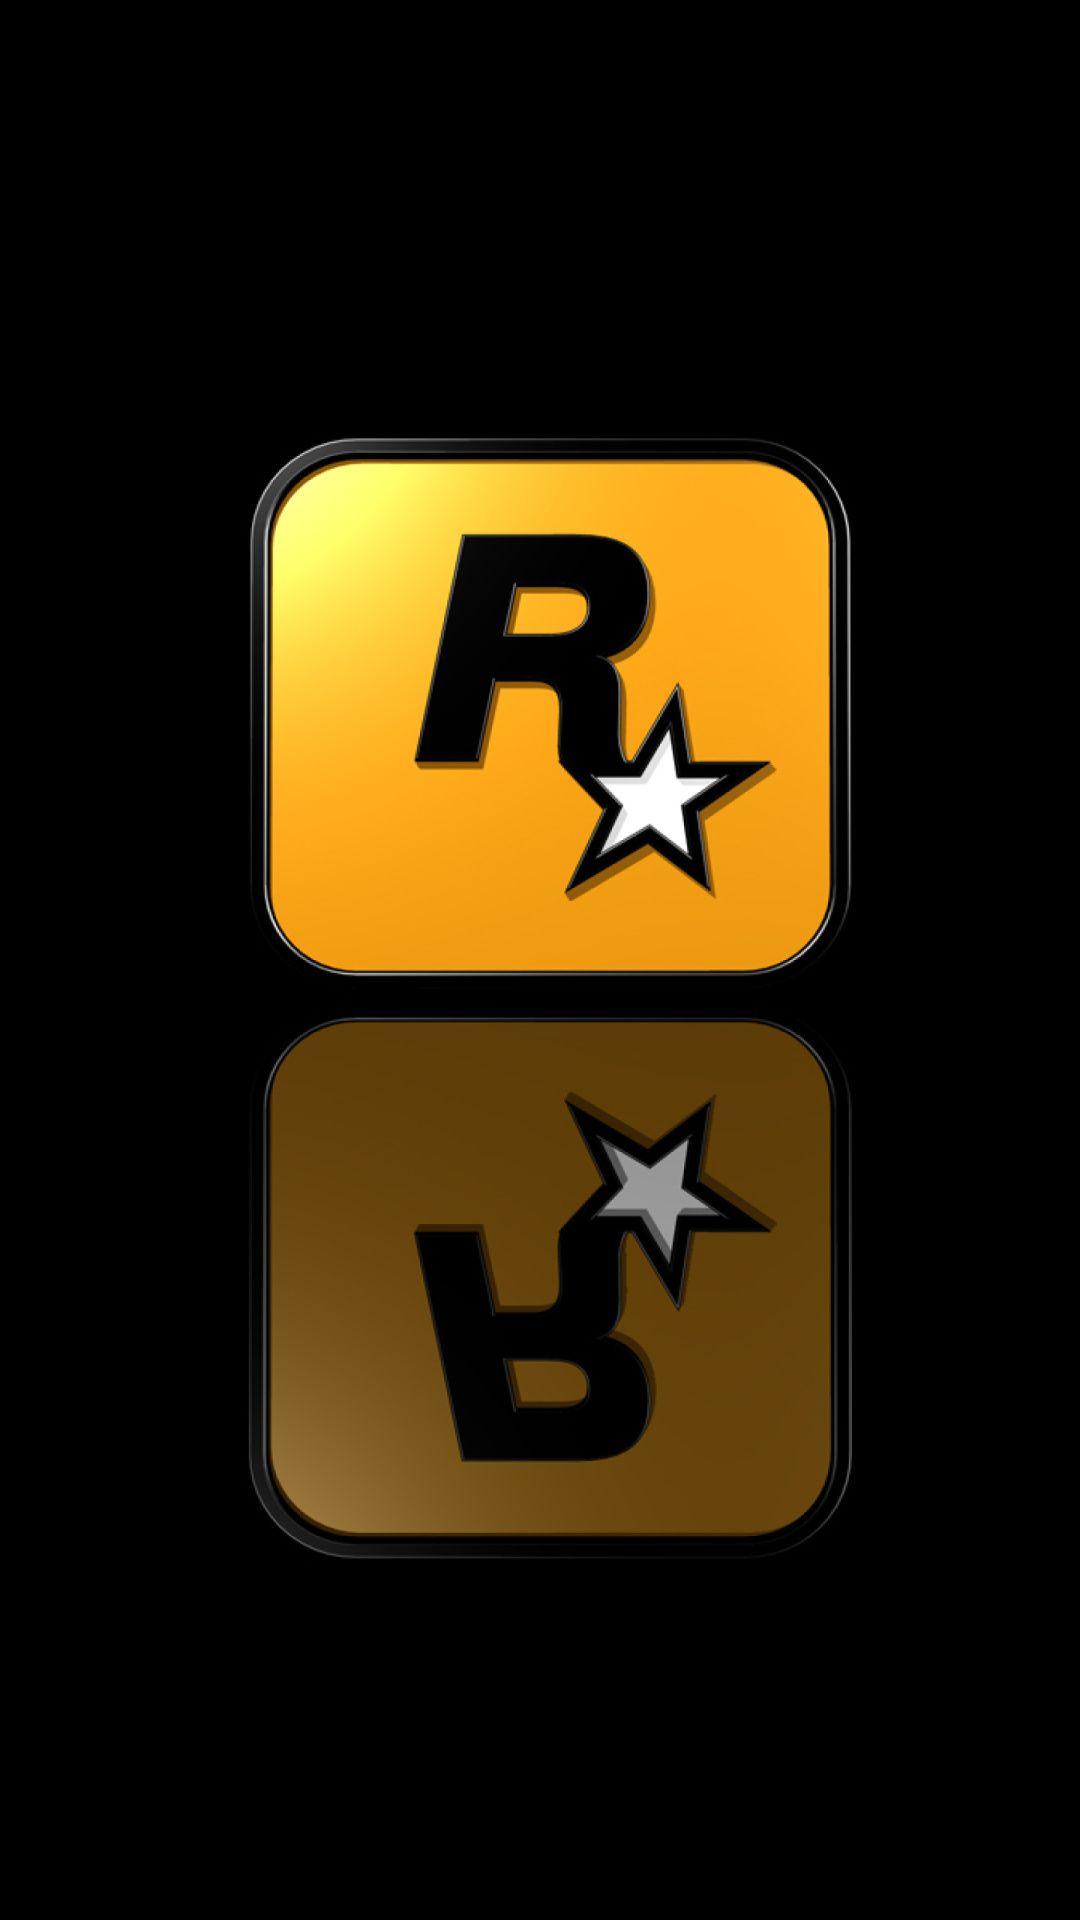 Rockstar games logo 1080x1920 iphone mobile photo